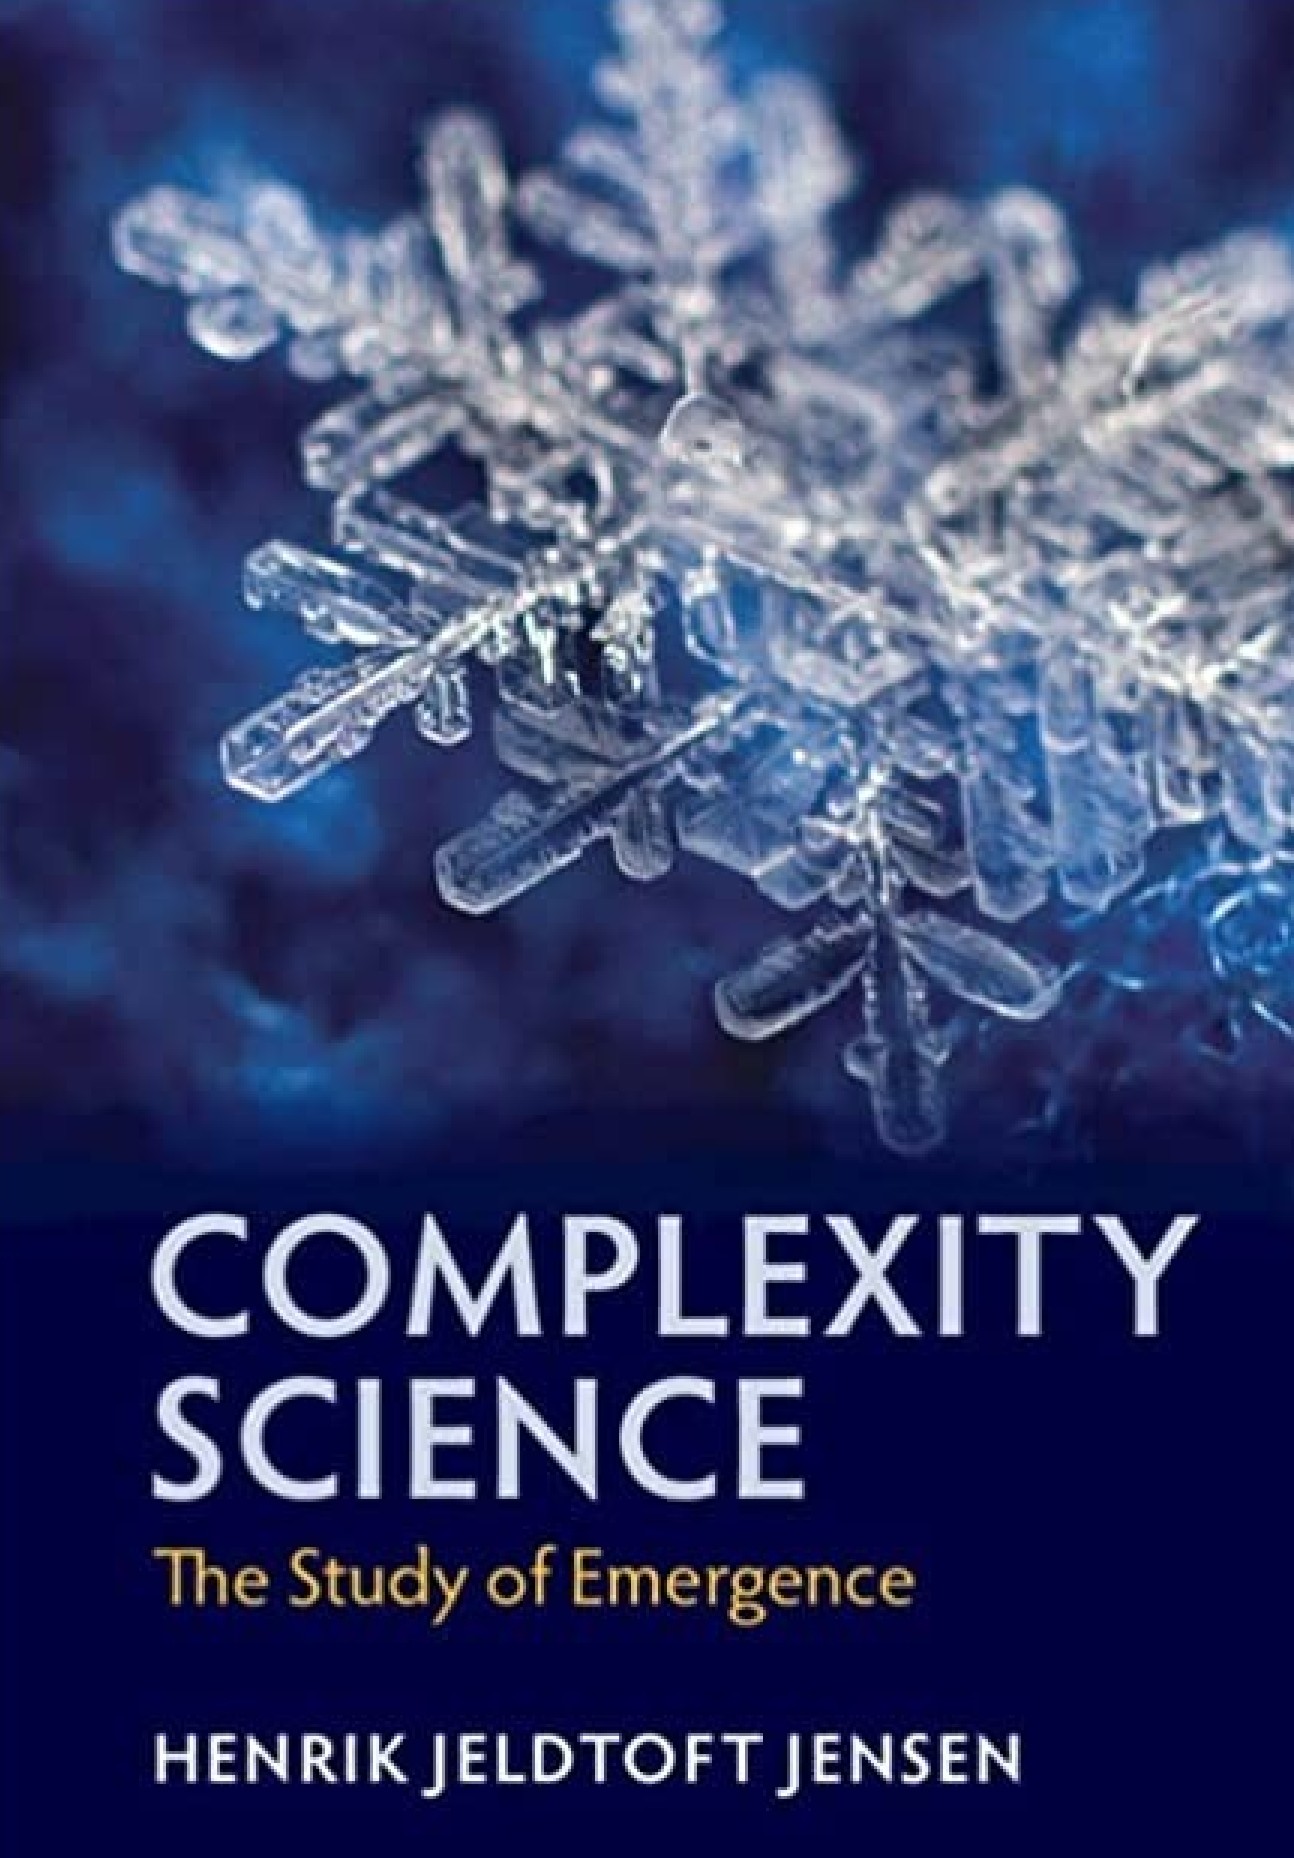 The cover of Prof Henrik Jeldtoft Jensen's book 'Complexity Science'.